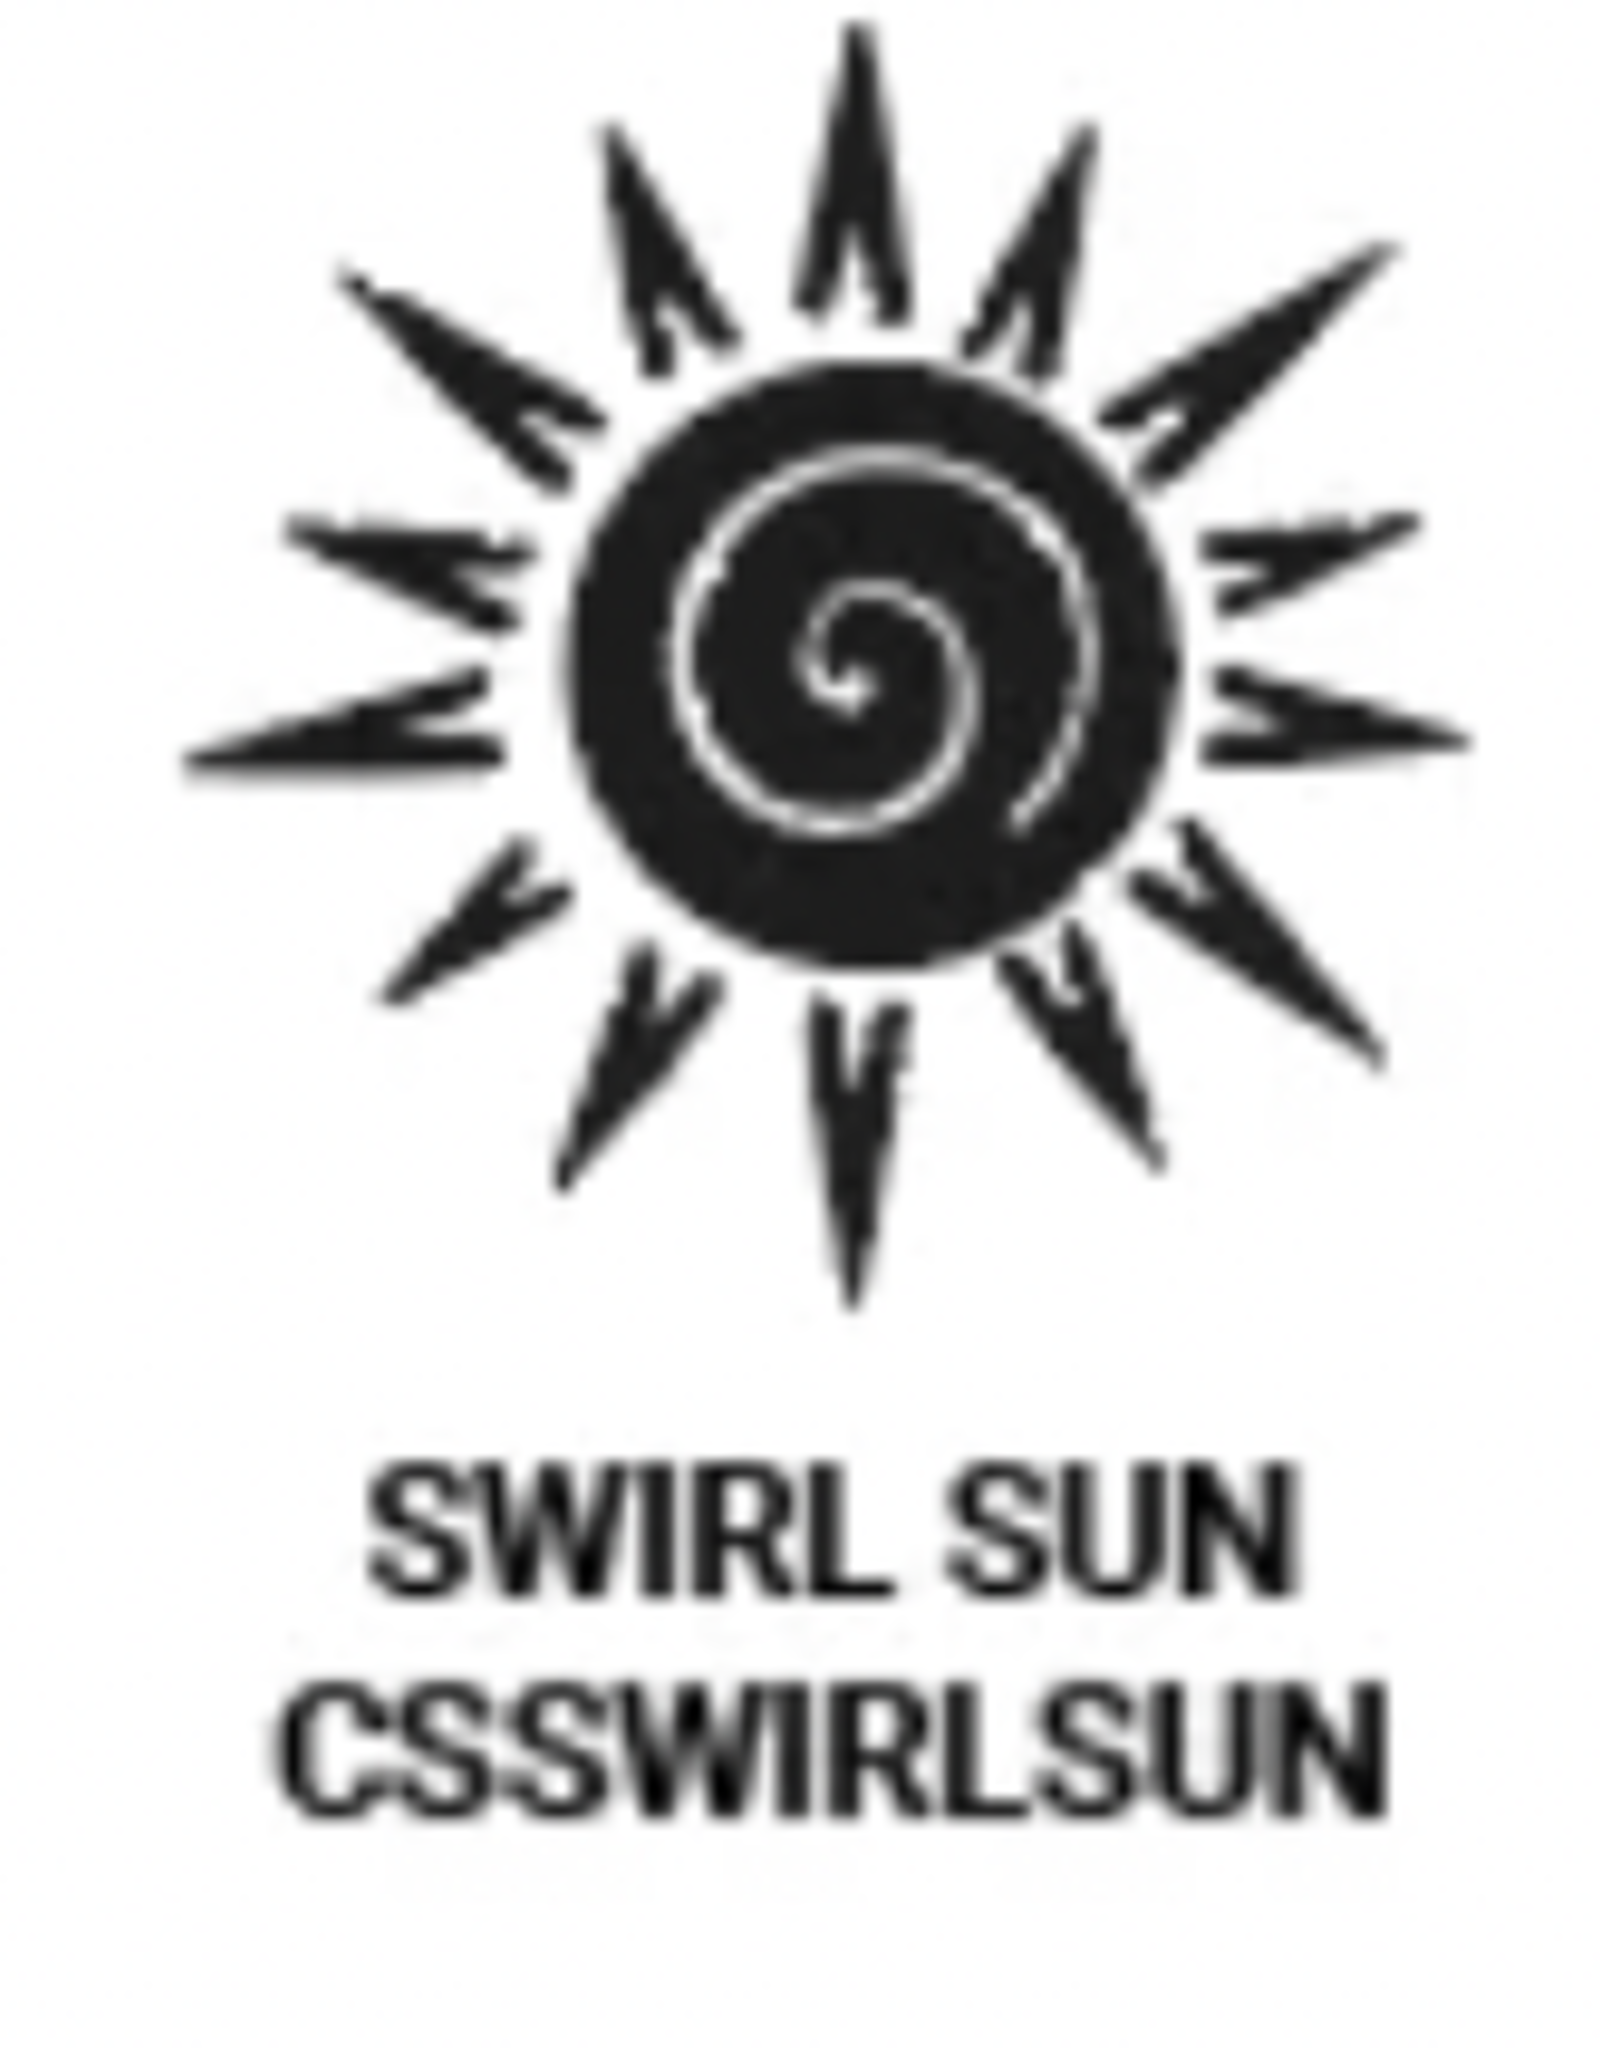 Global Solutions Classic Seal - Swirl Sun